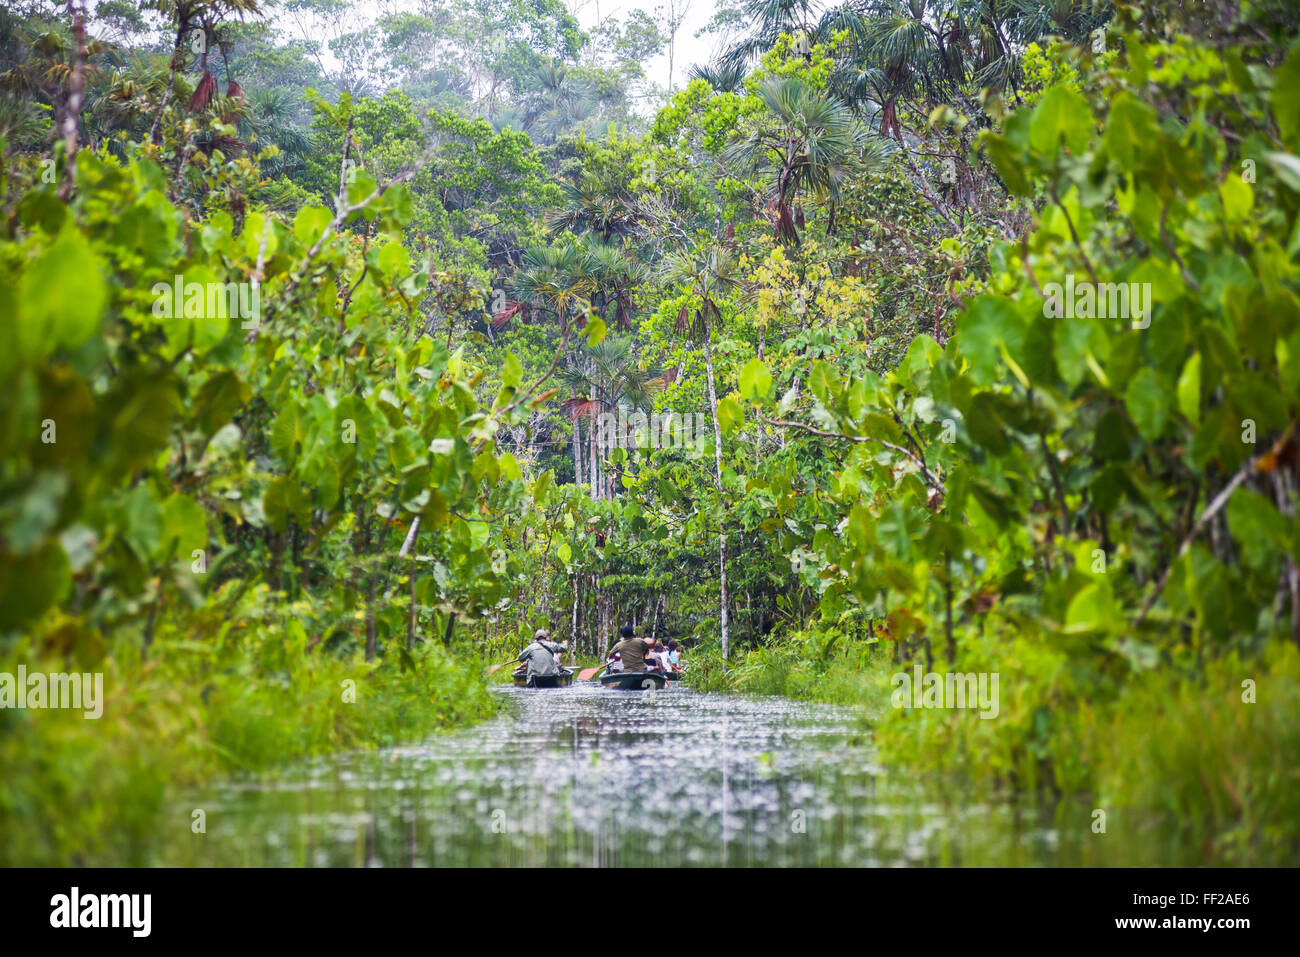 Amazon Rainforest dugout canoe ride, Sacha RModge, Coca, Ecuador, South America Stock Photo